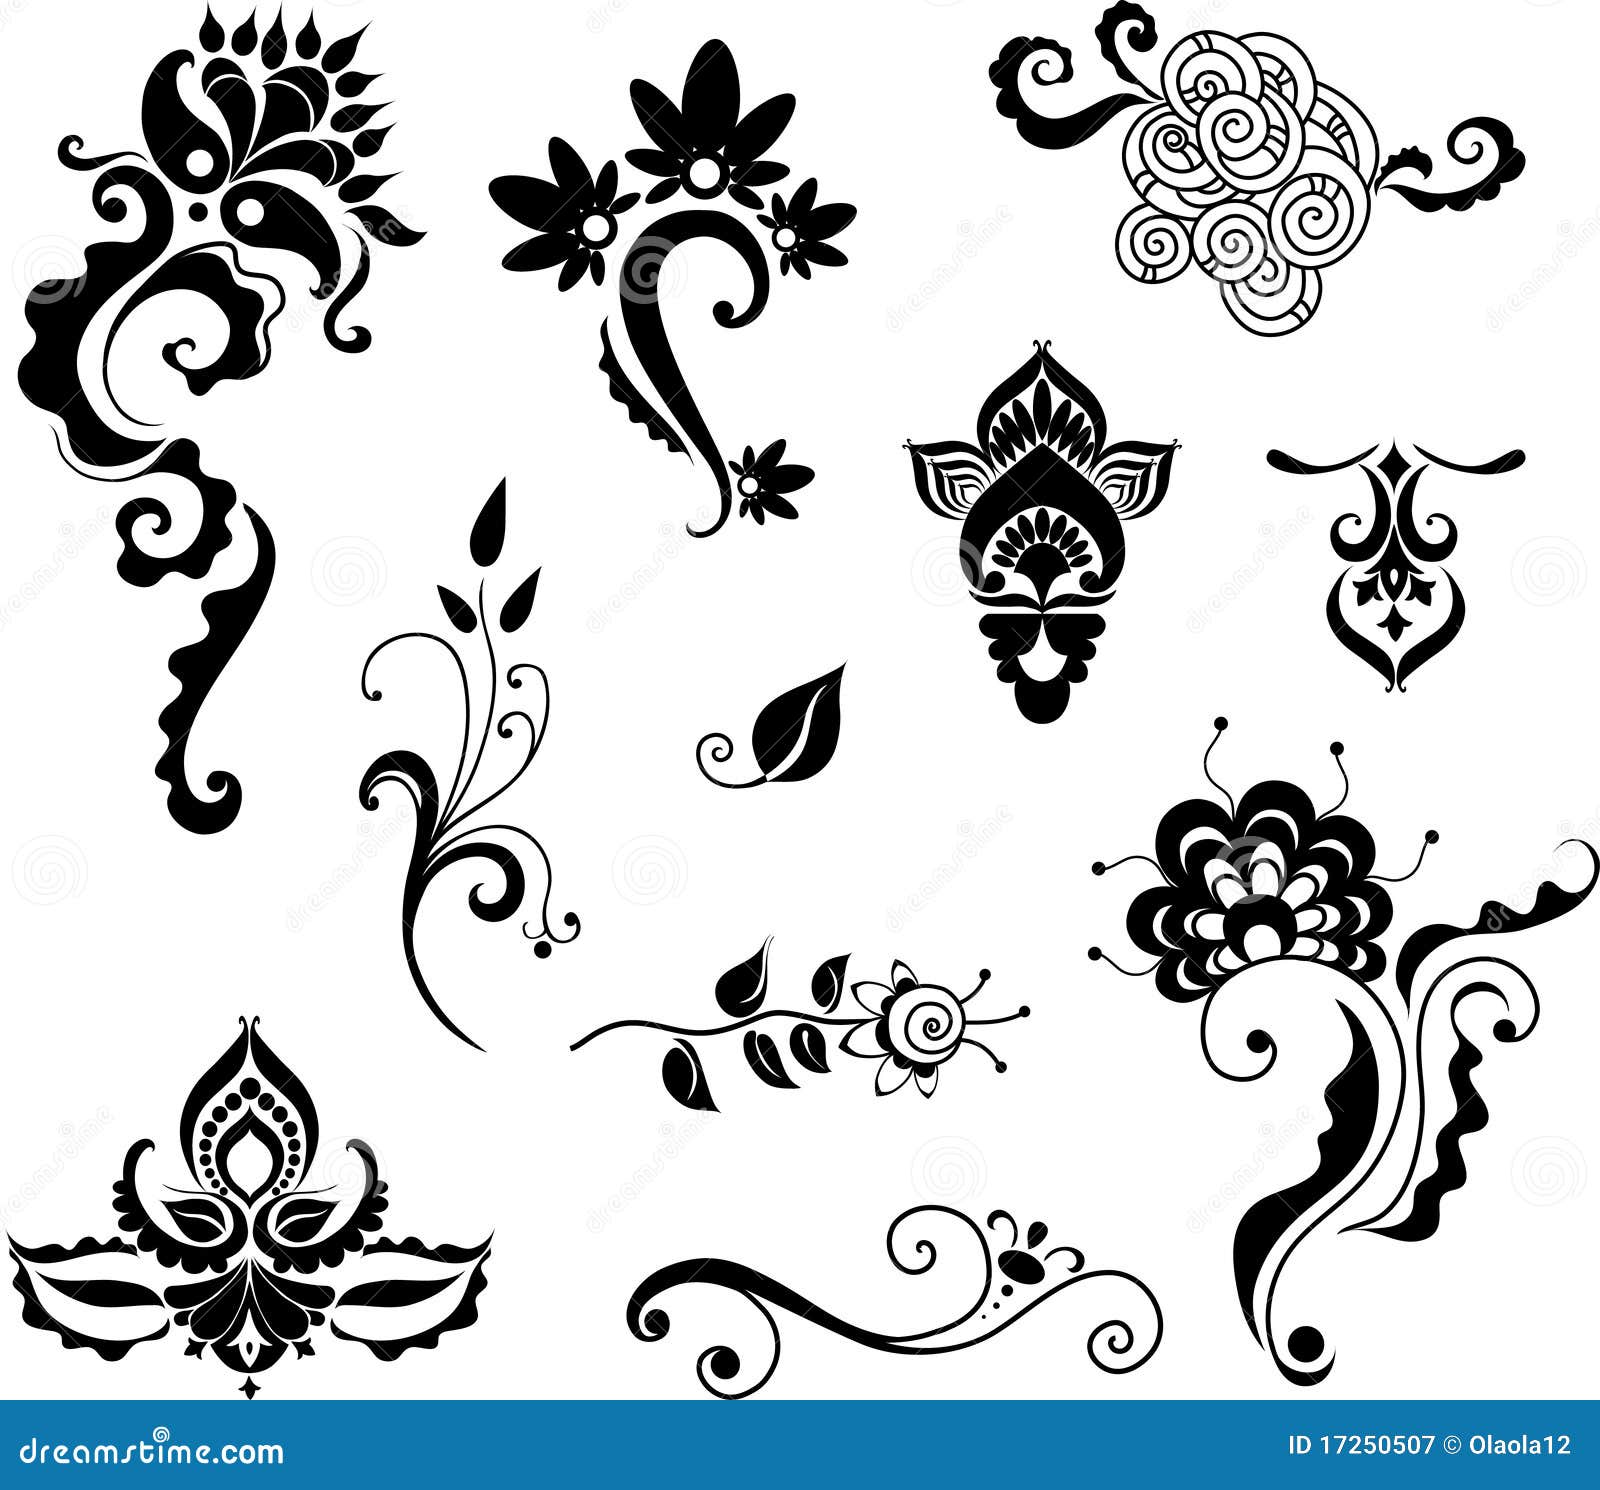 Decorative Floral Elements For Design Stock Vector Illustration Of Leaves Form